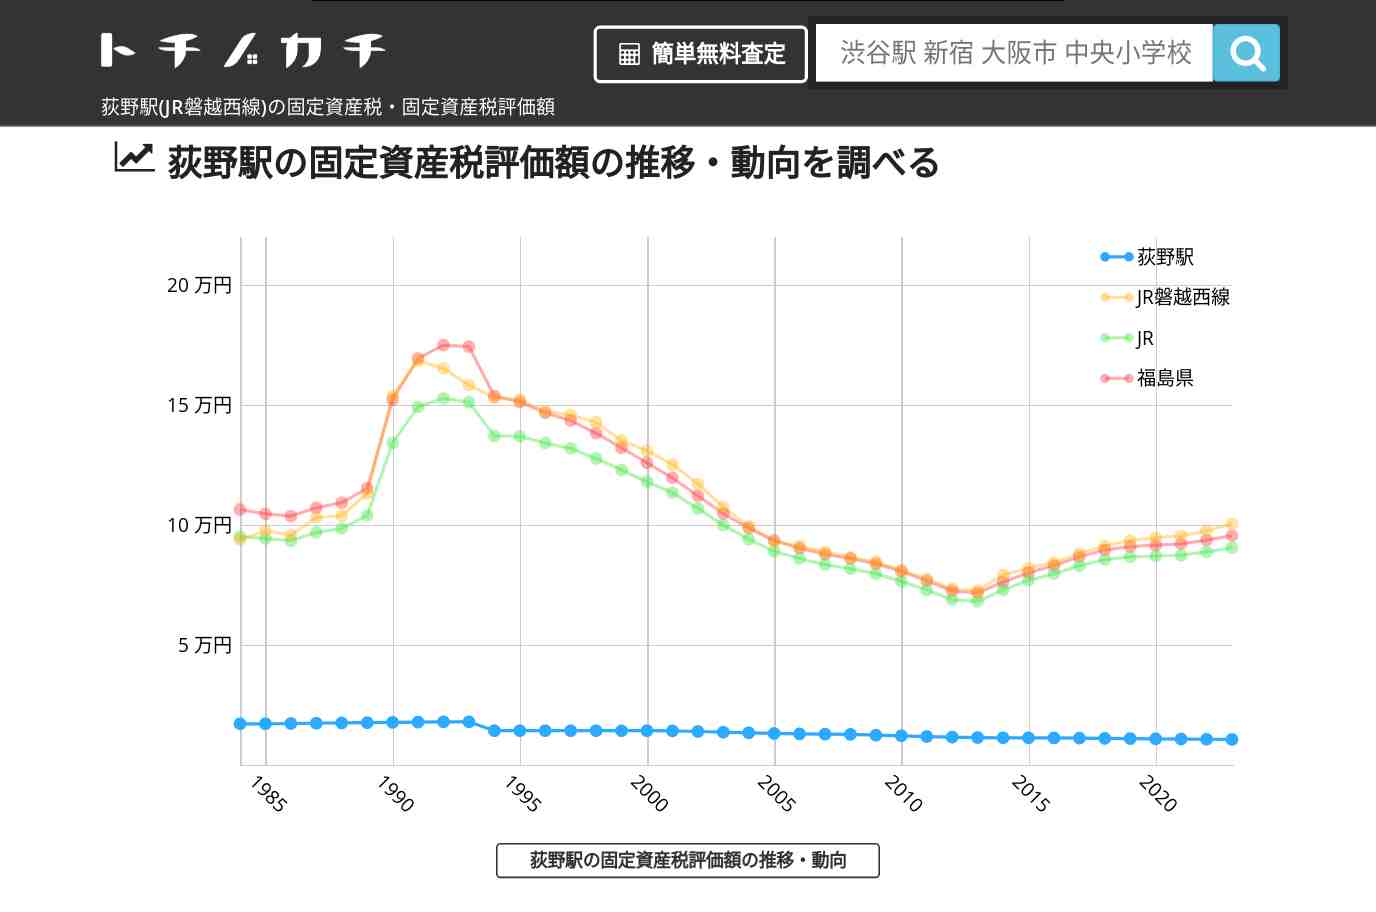 荻野駅(JR磐越西線)の固定資産税・固定資産税評価額 | トチノカチ